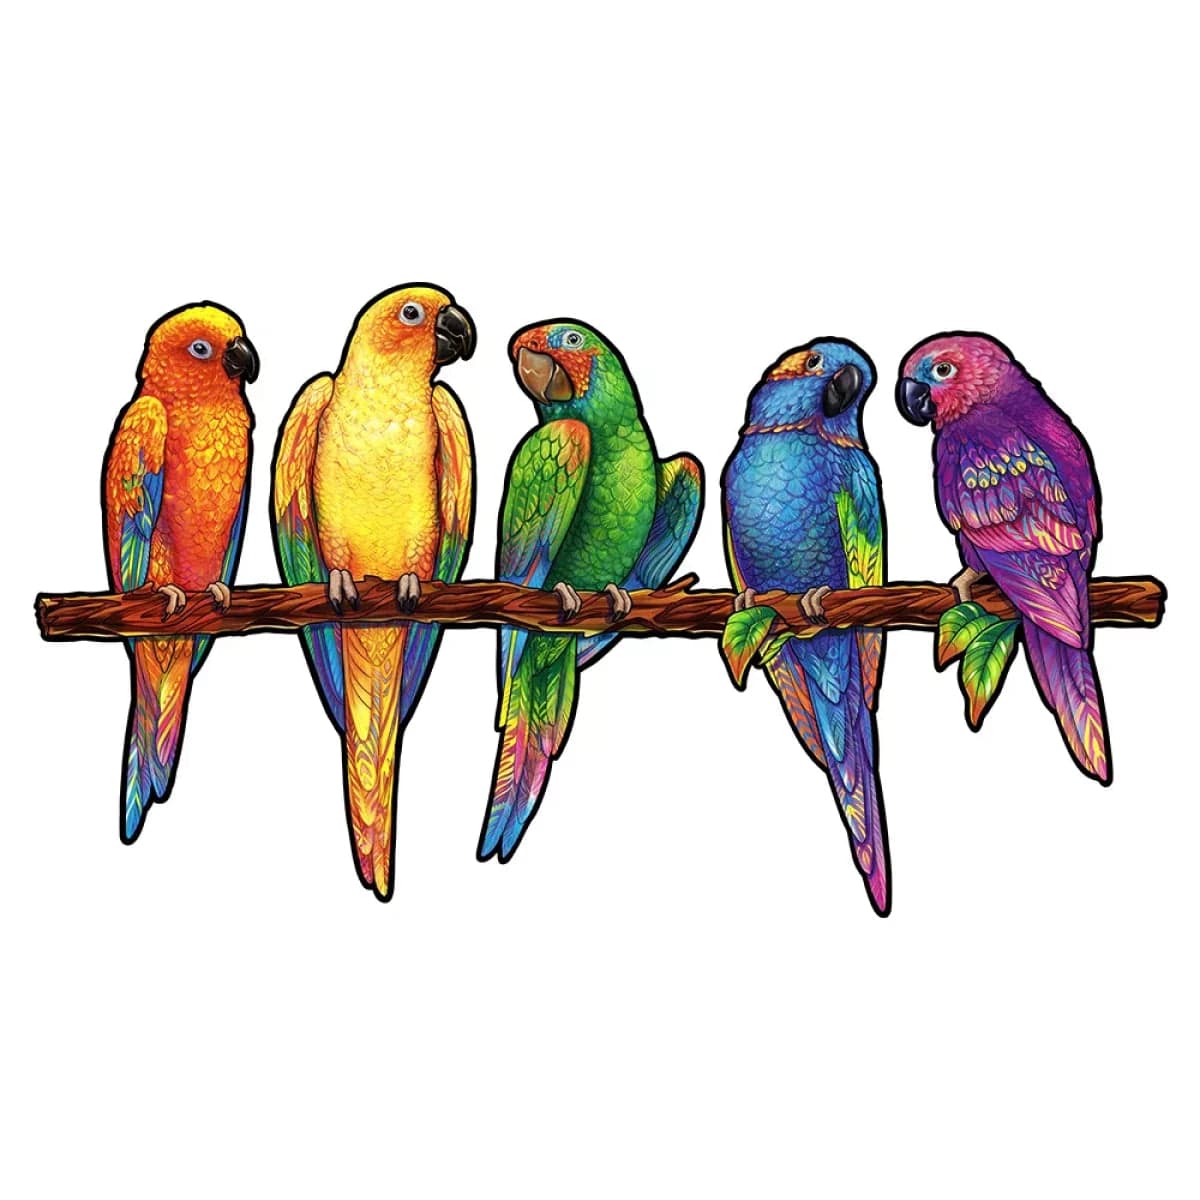 Playful Parrots Wooden Puzzle - King Size